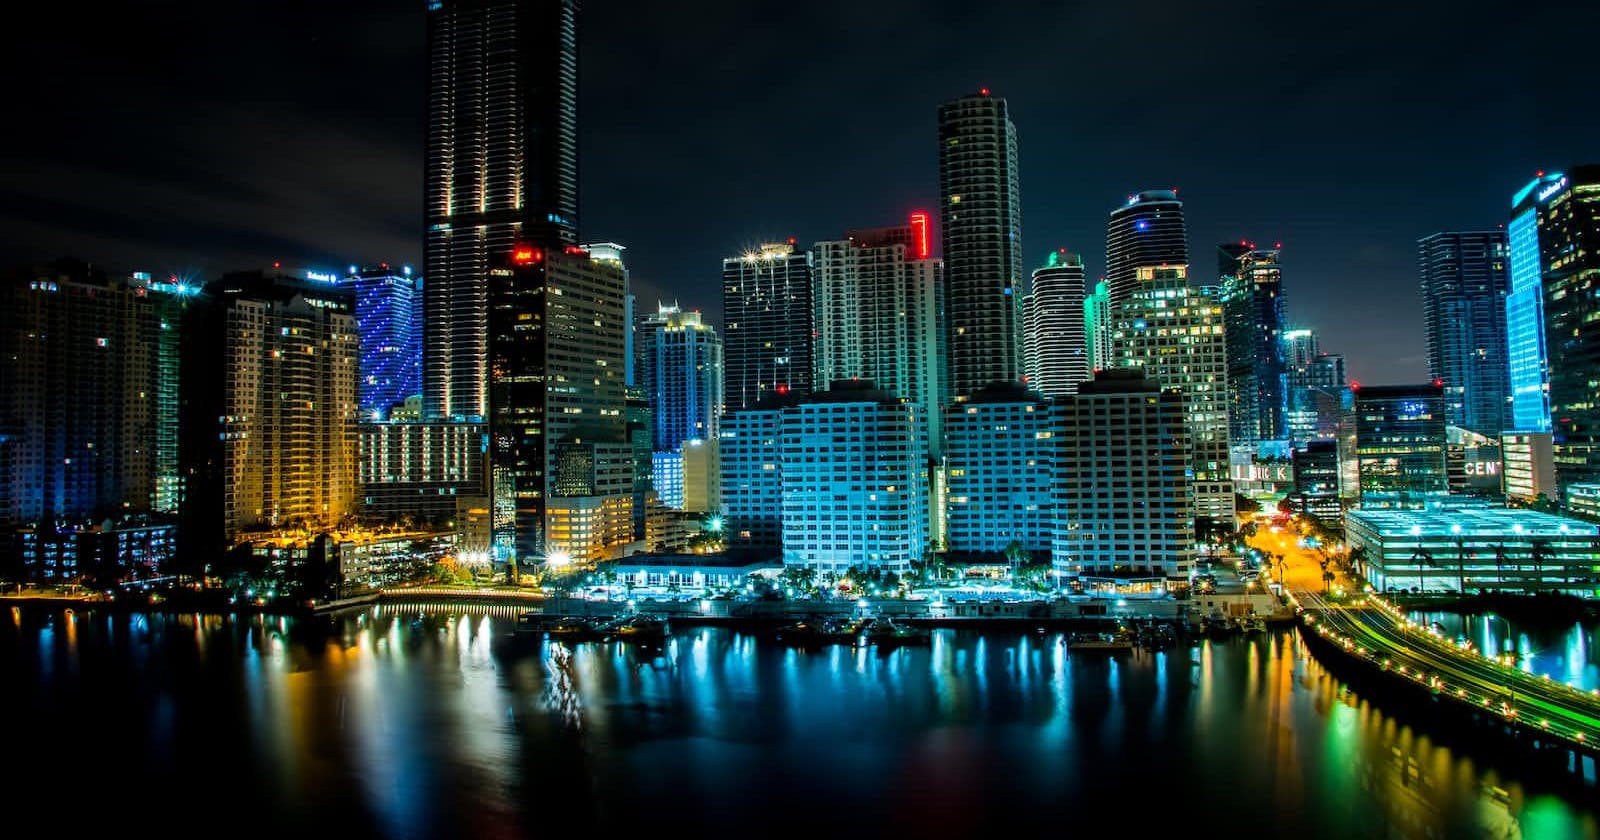 Miami Hackweek 2022 - My Perspective